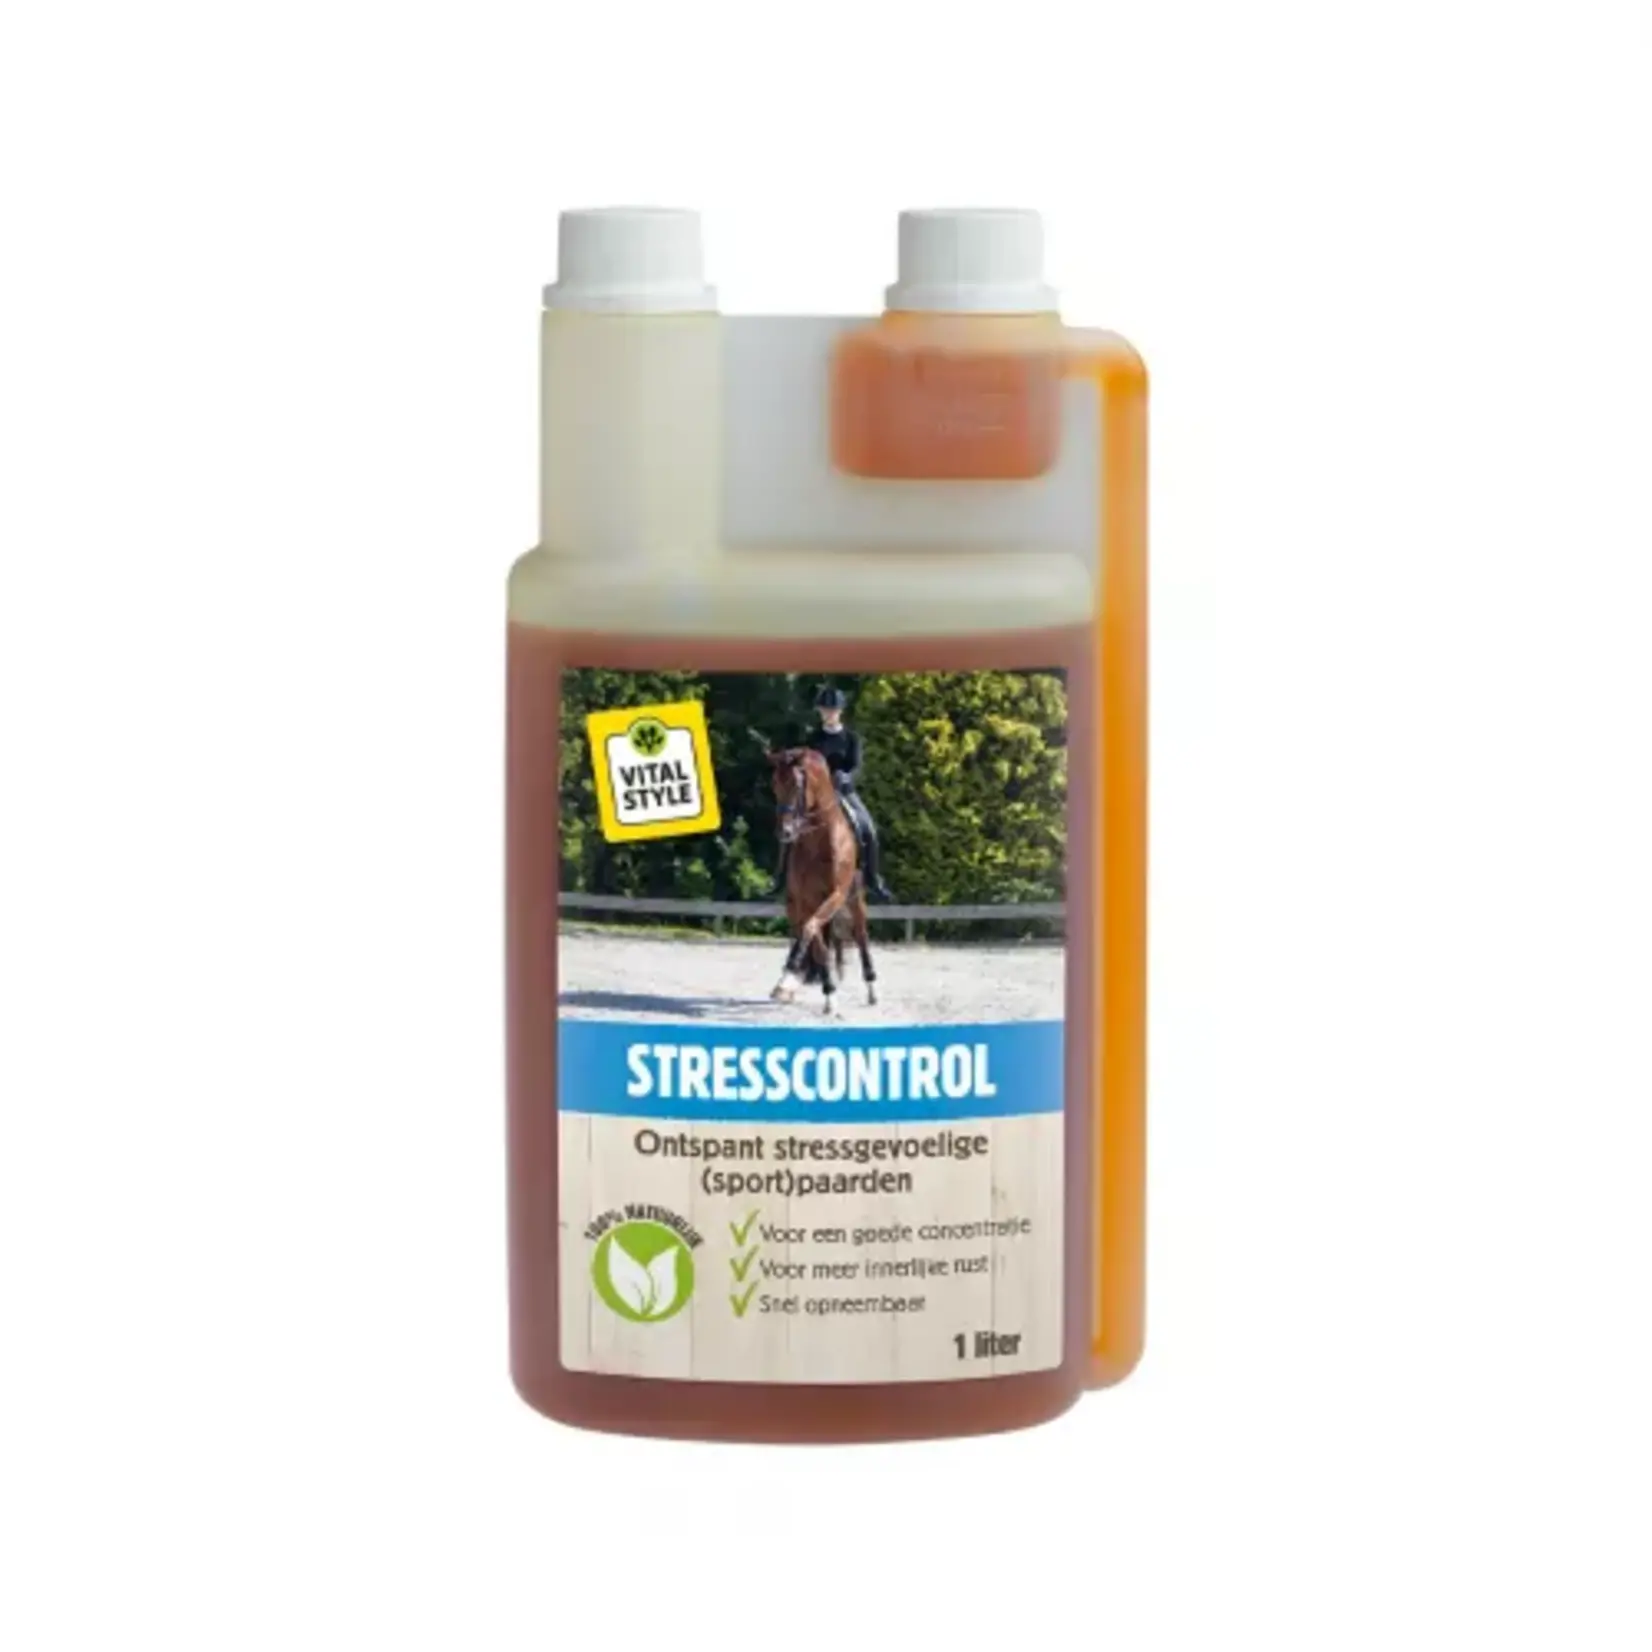 VITALstyle StressControl 1 liter tegen stress bij paarden